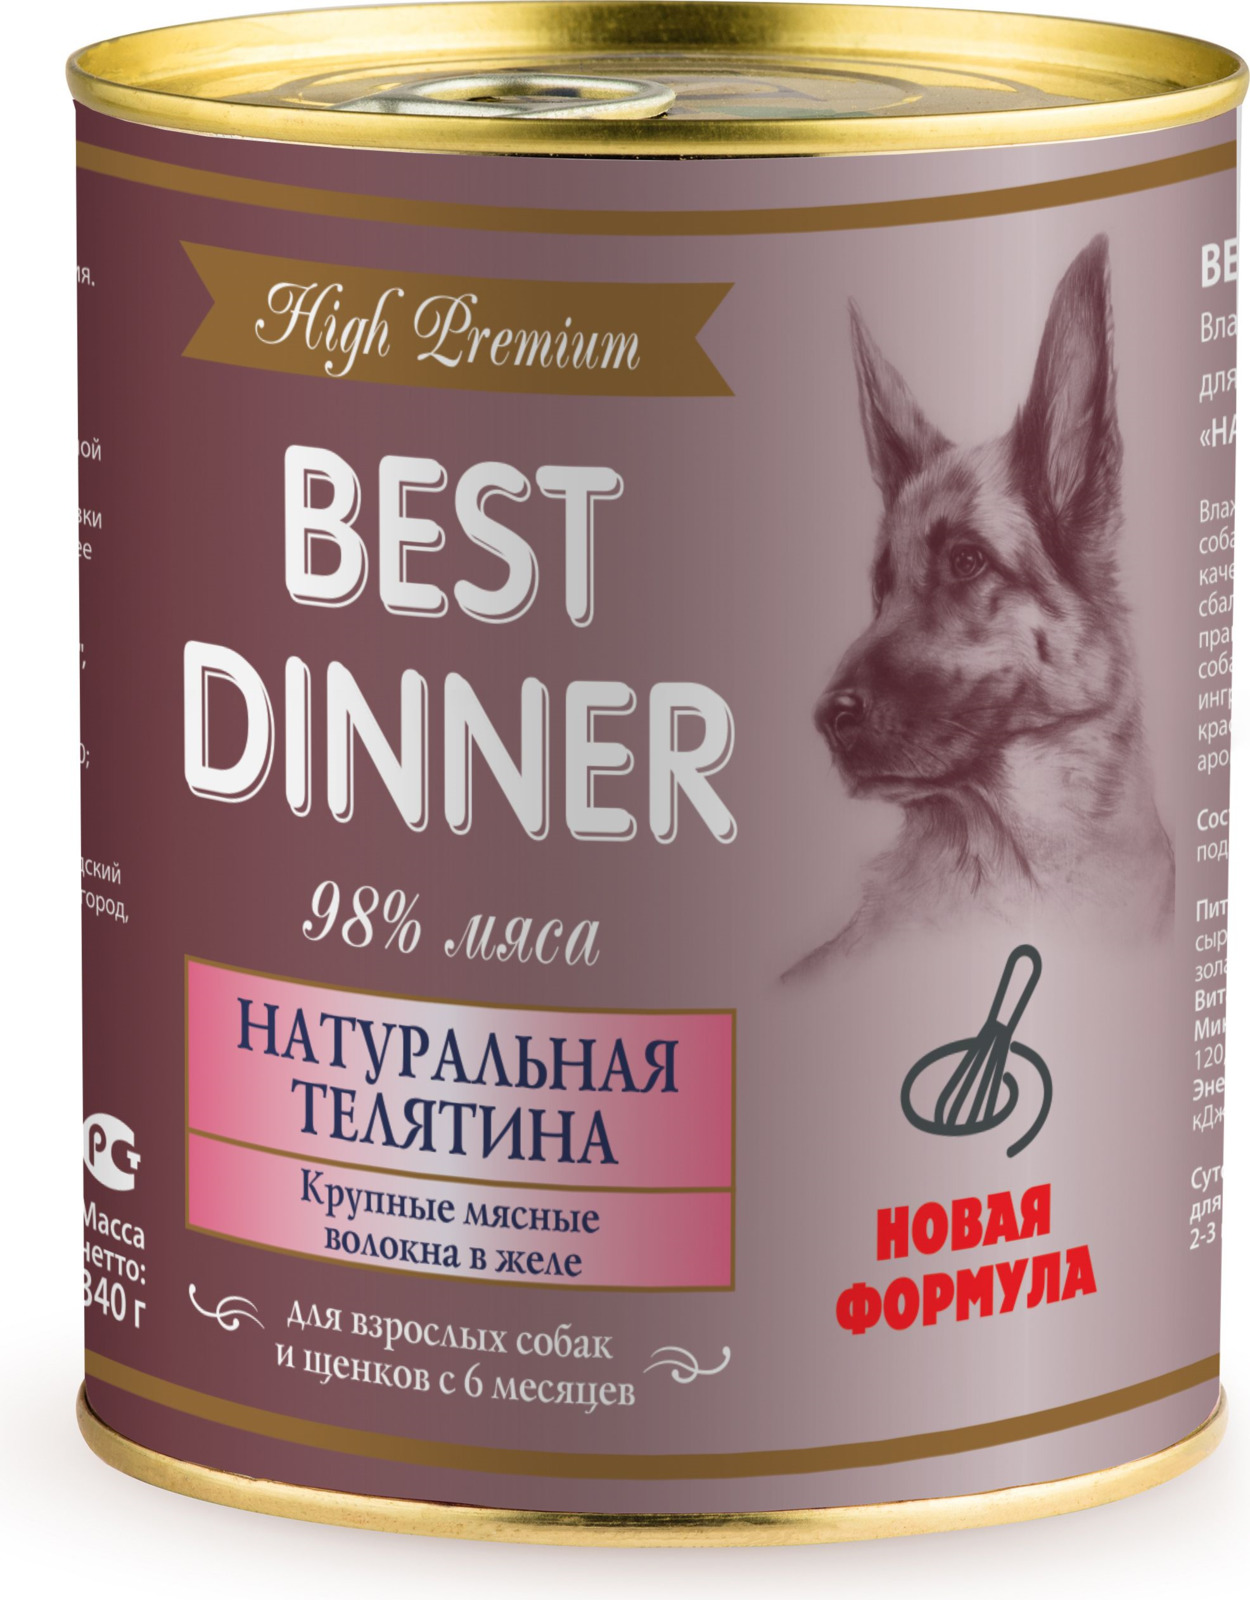 фото Корм консервированный для собак Best Dinner High Premium, натуральная телятина, 340 г